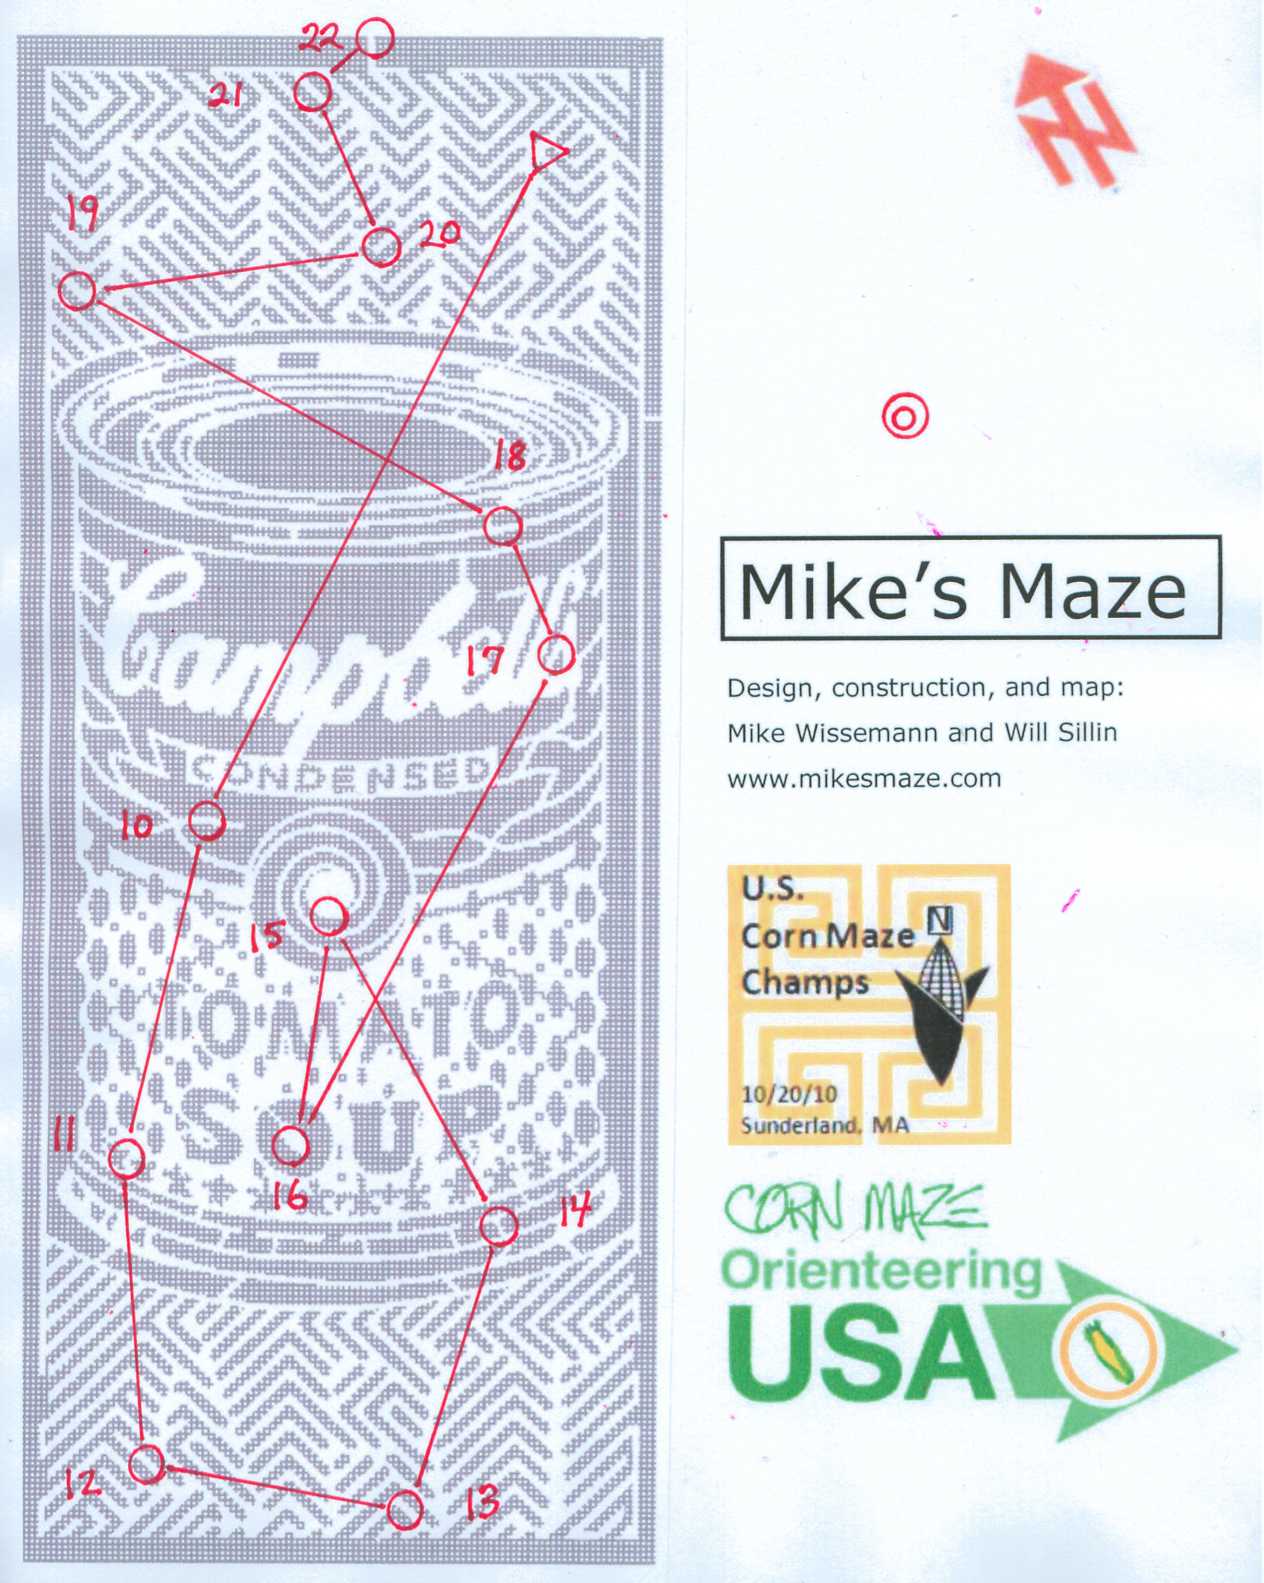 US Corn Maze Orienteering Classic Champs - Part 2 (20/10/2010)